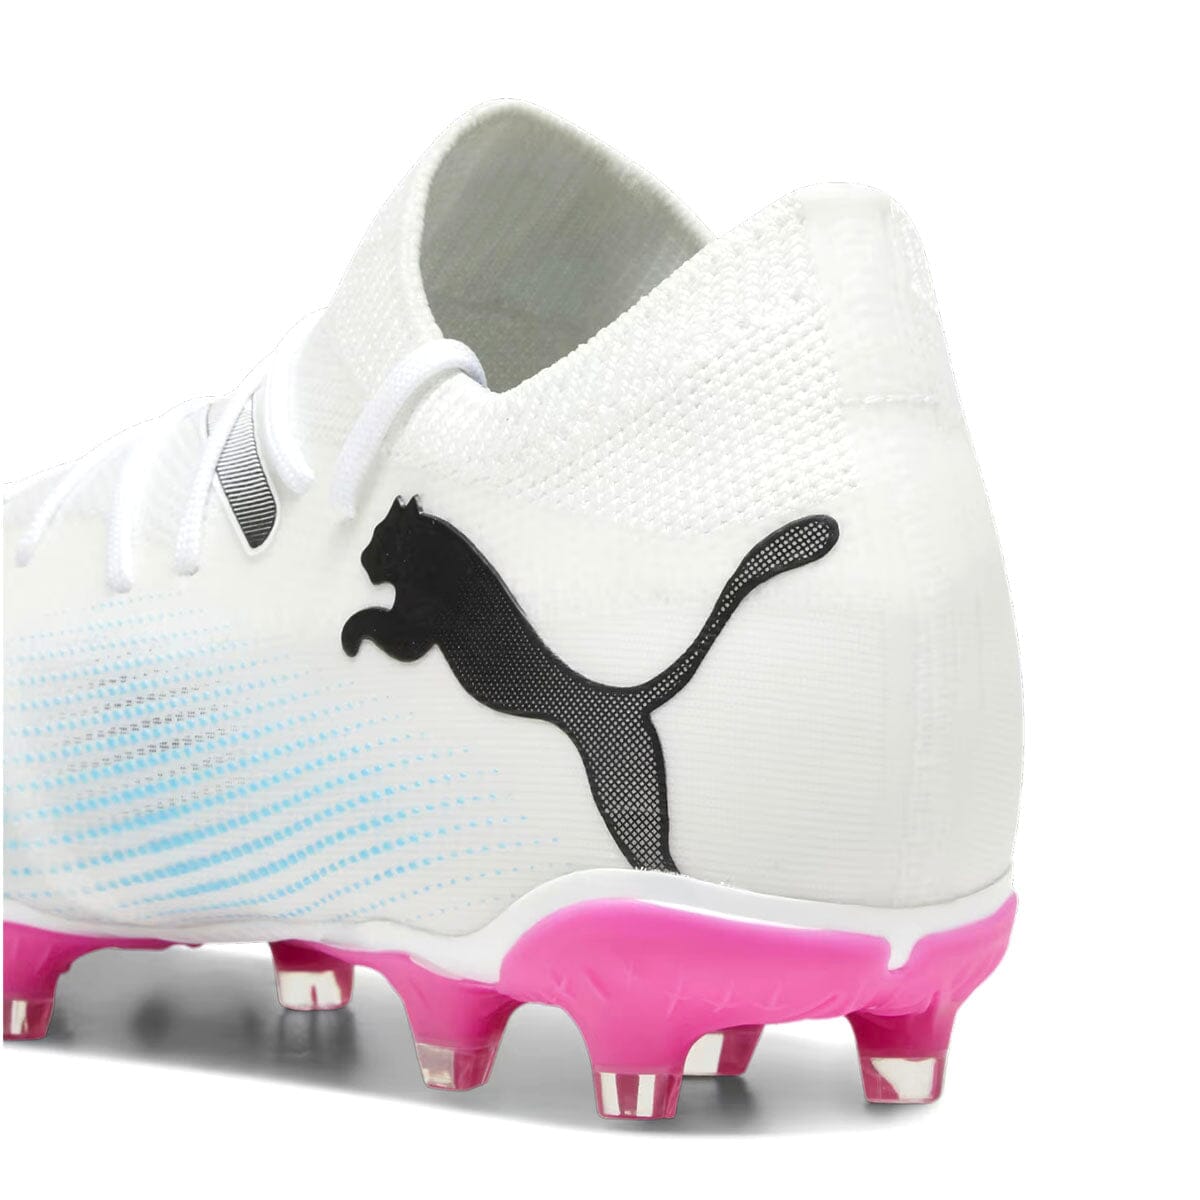 Puma, Future.1 Firm Ground Football Boots Womens